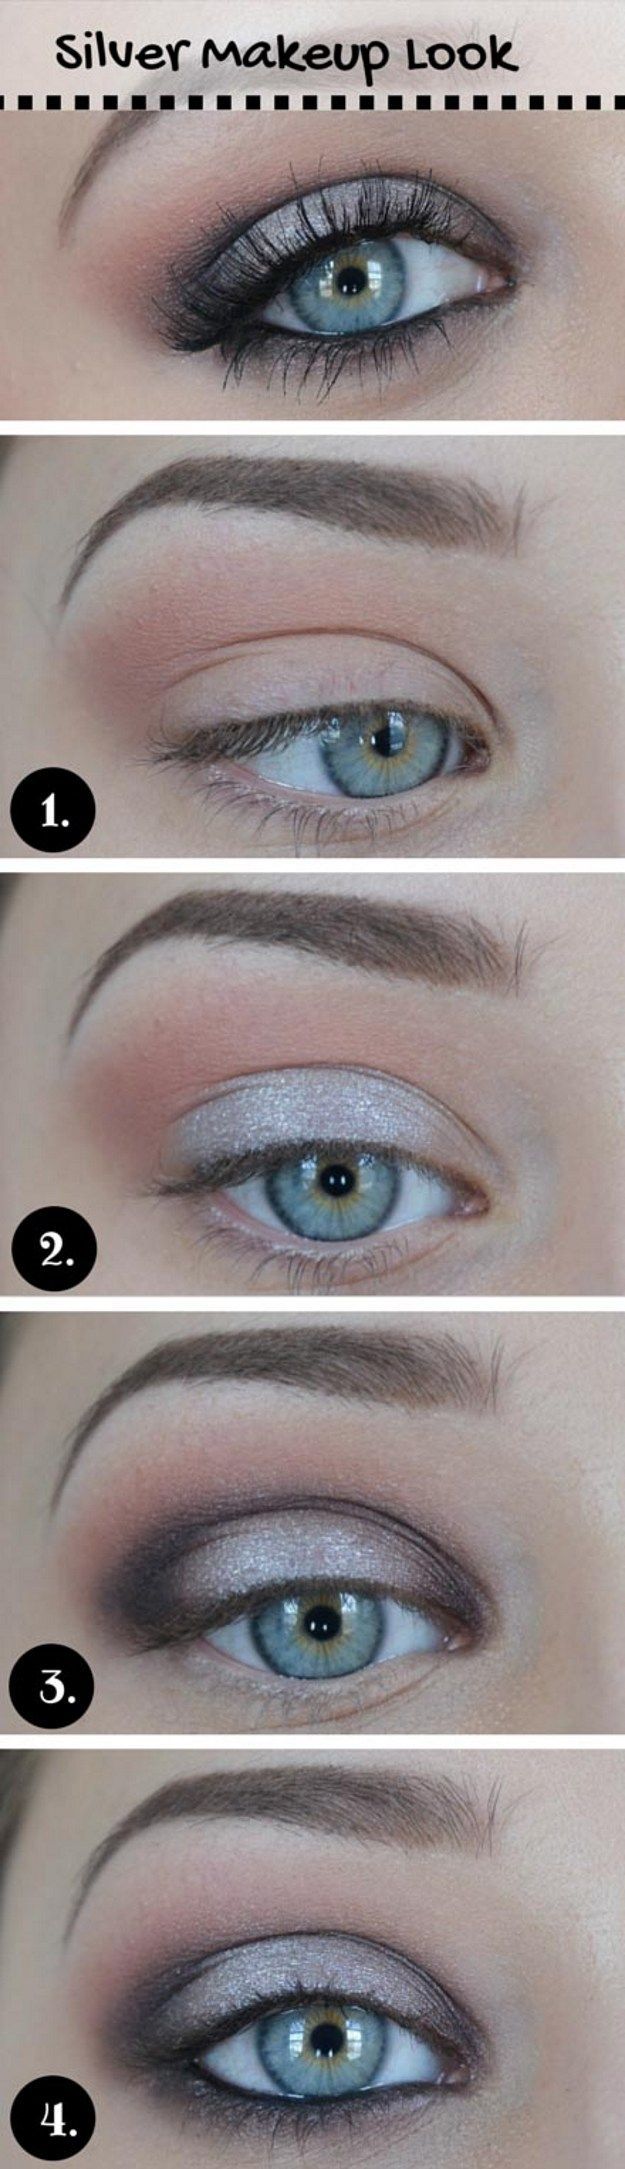 How to Do Silver Eye Makeup | Metallic Eyes by Makeup Tutorials at www.makeuptut...